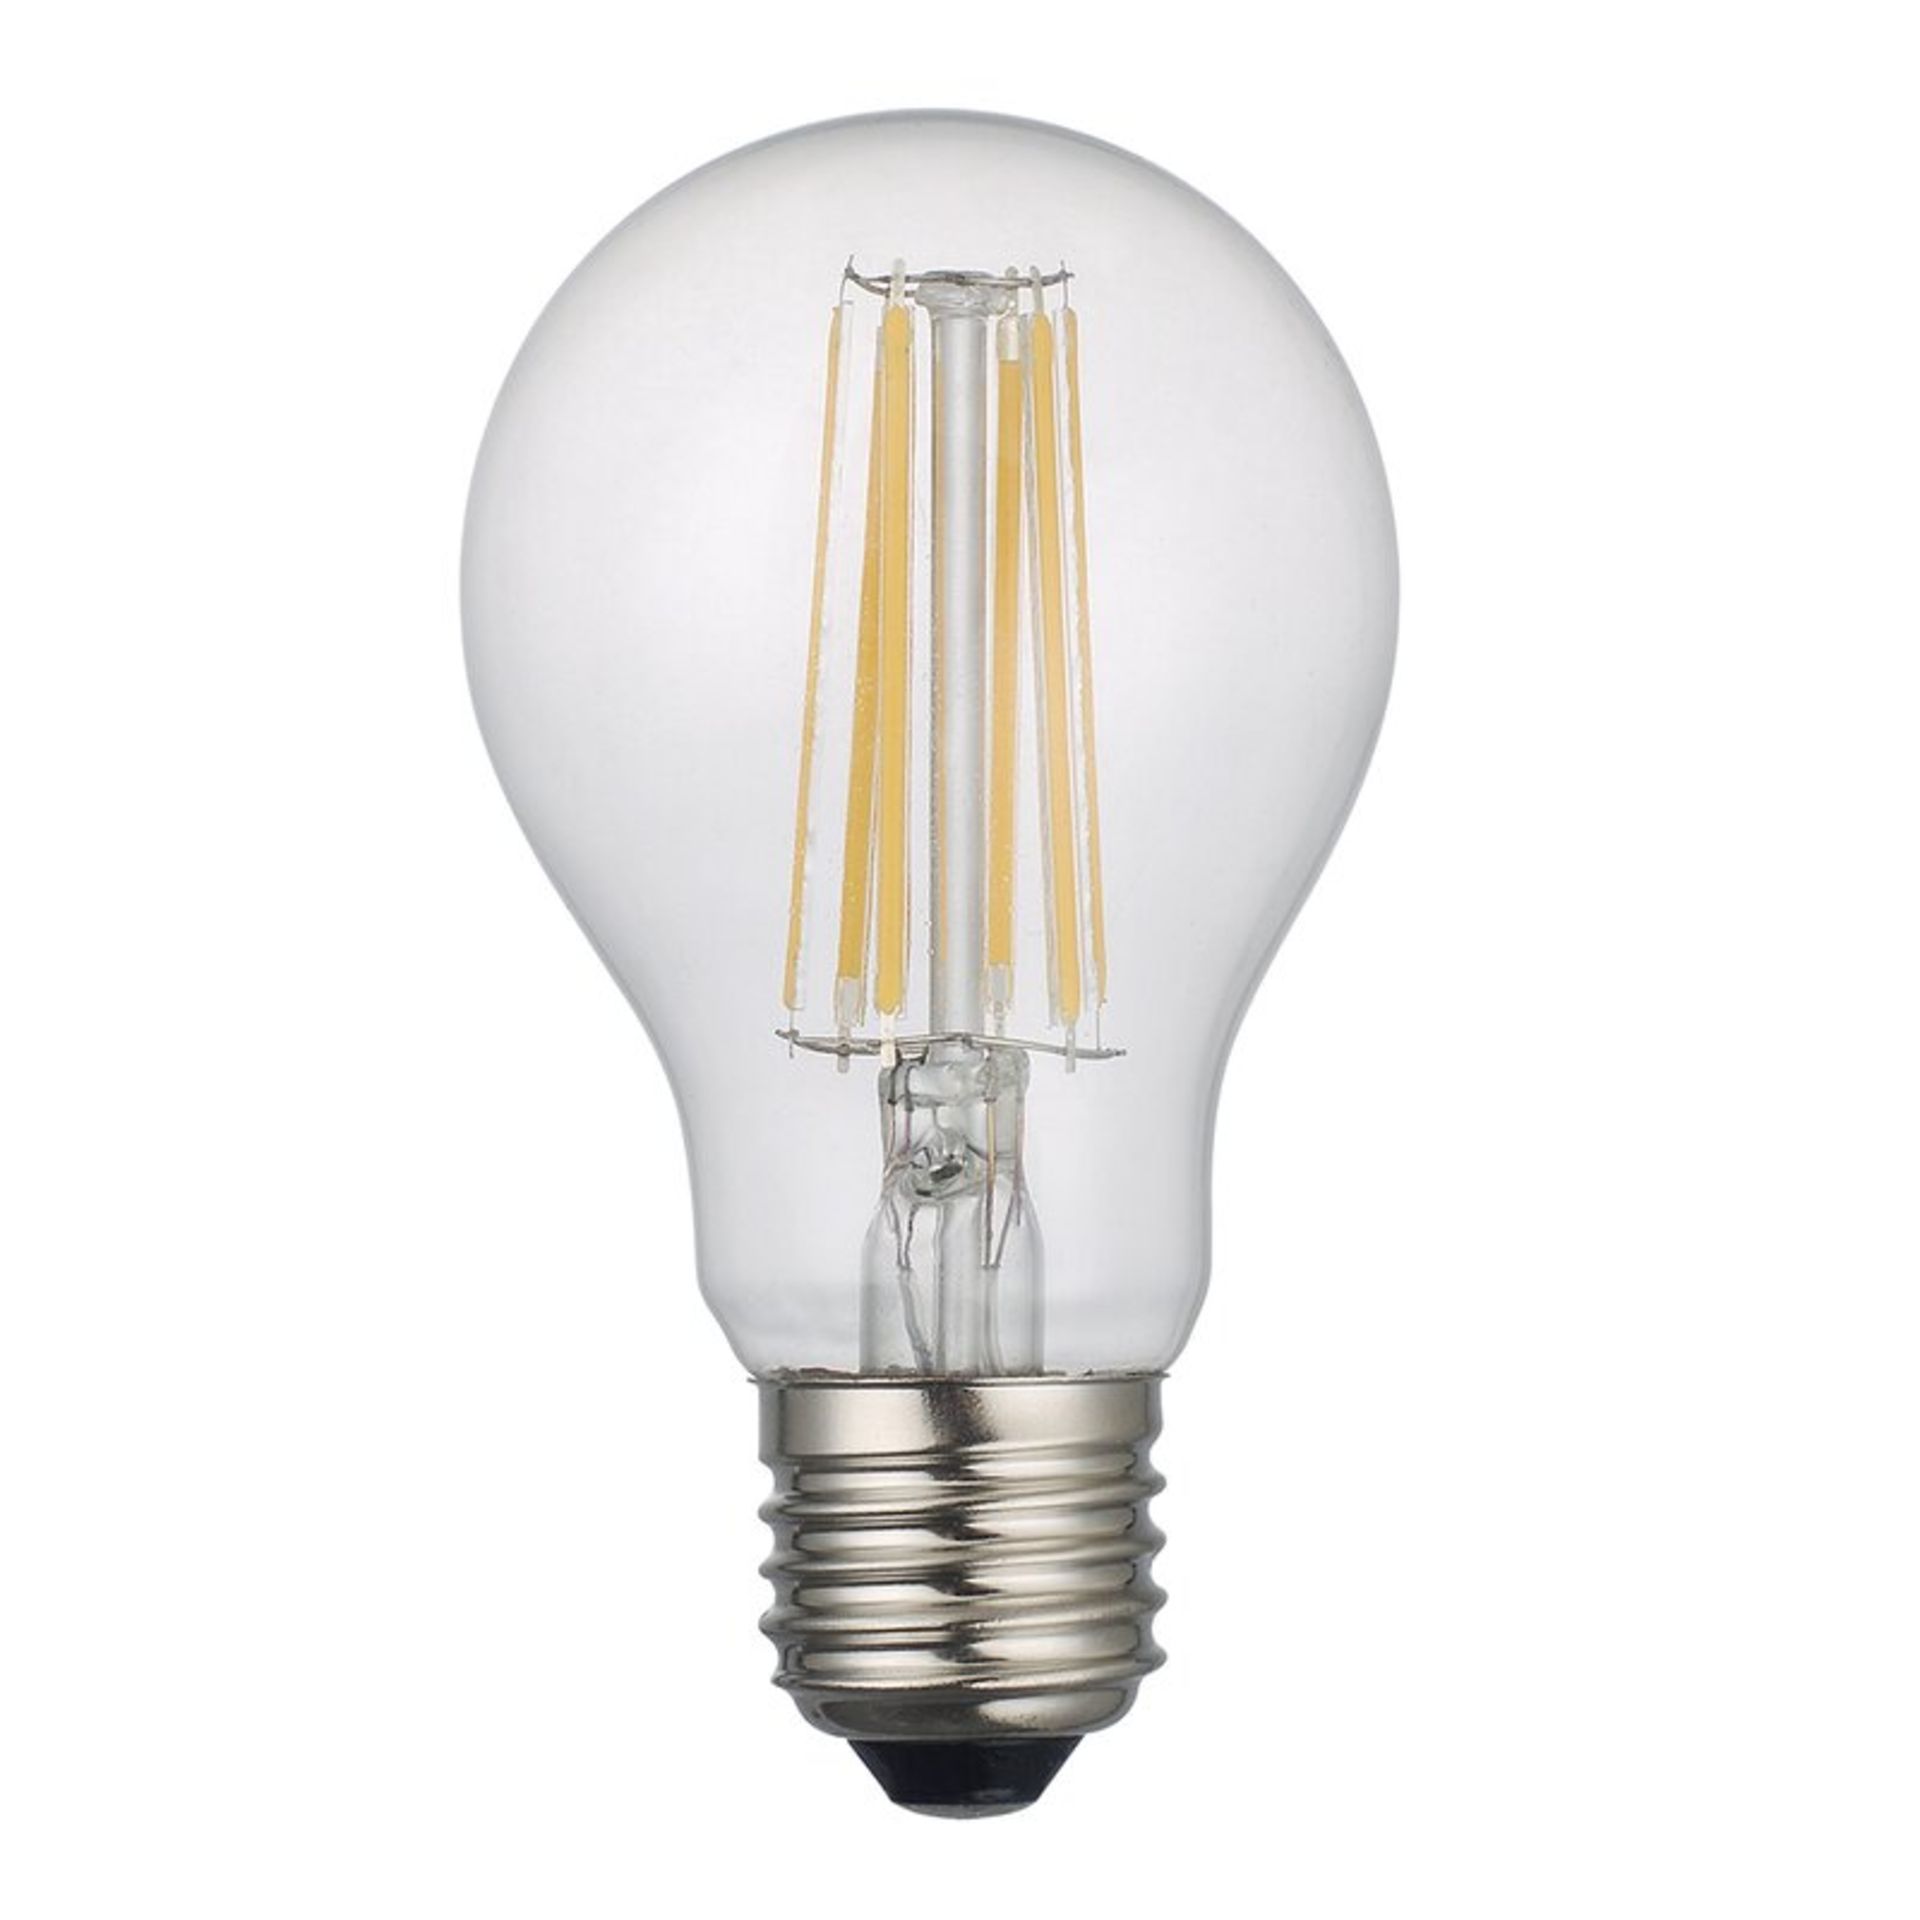 8W LED Vintage Filament Light Bulb (Set Of 5) by Symple Stuff